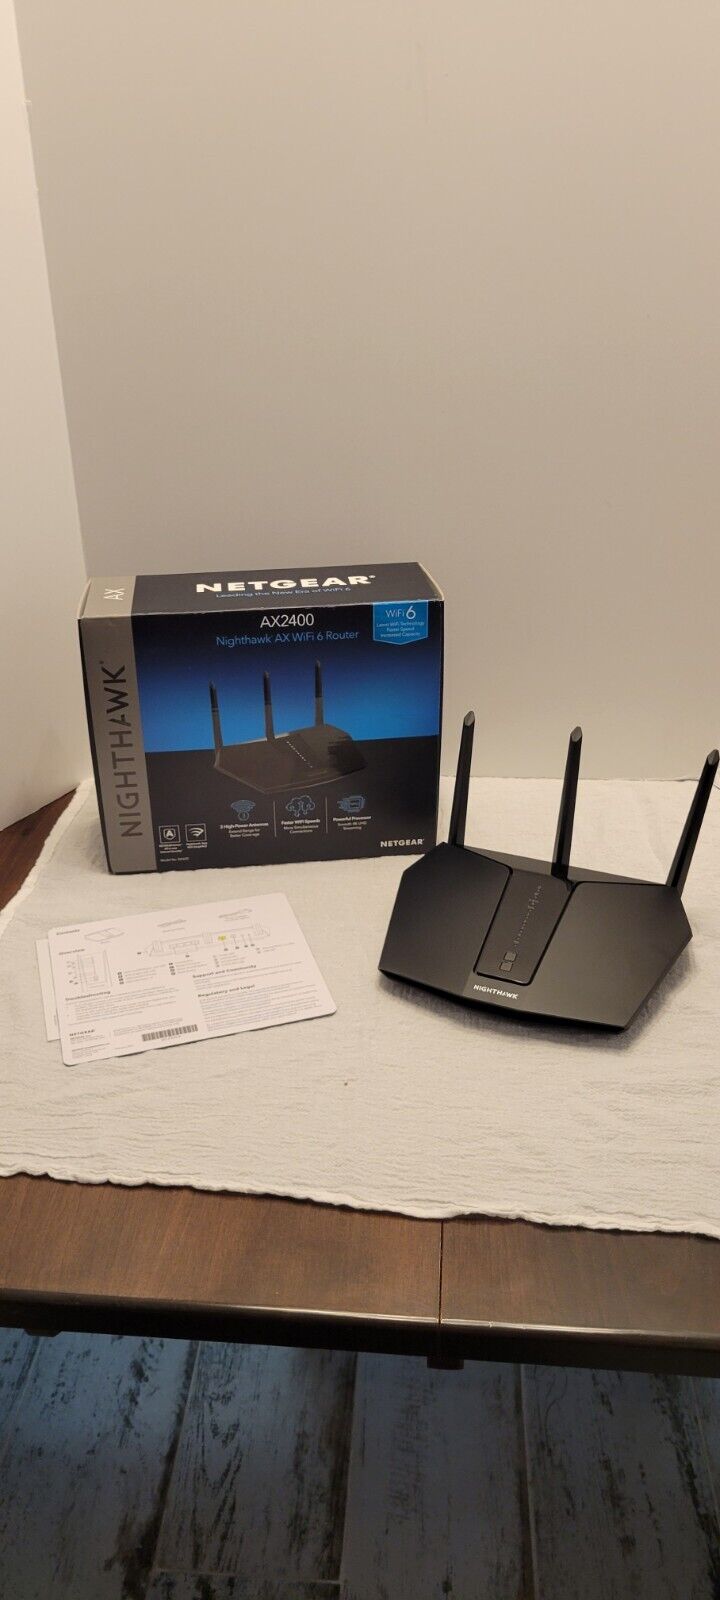 Netgear Nighthawk AX2400 5-Stream WiFi 6 Router - RAX29-100NAS